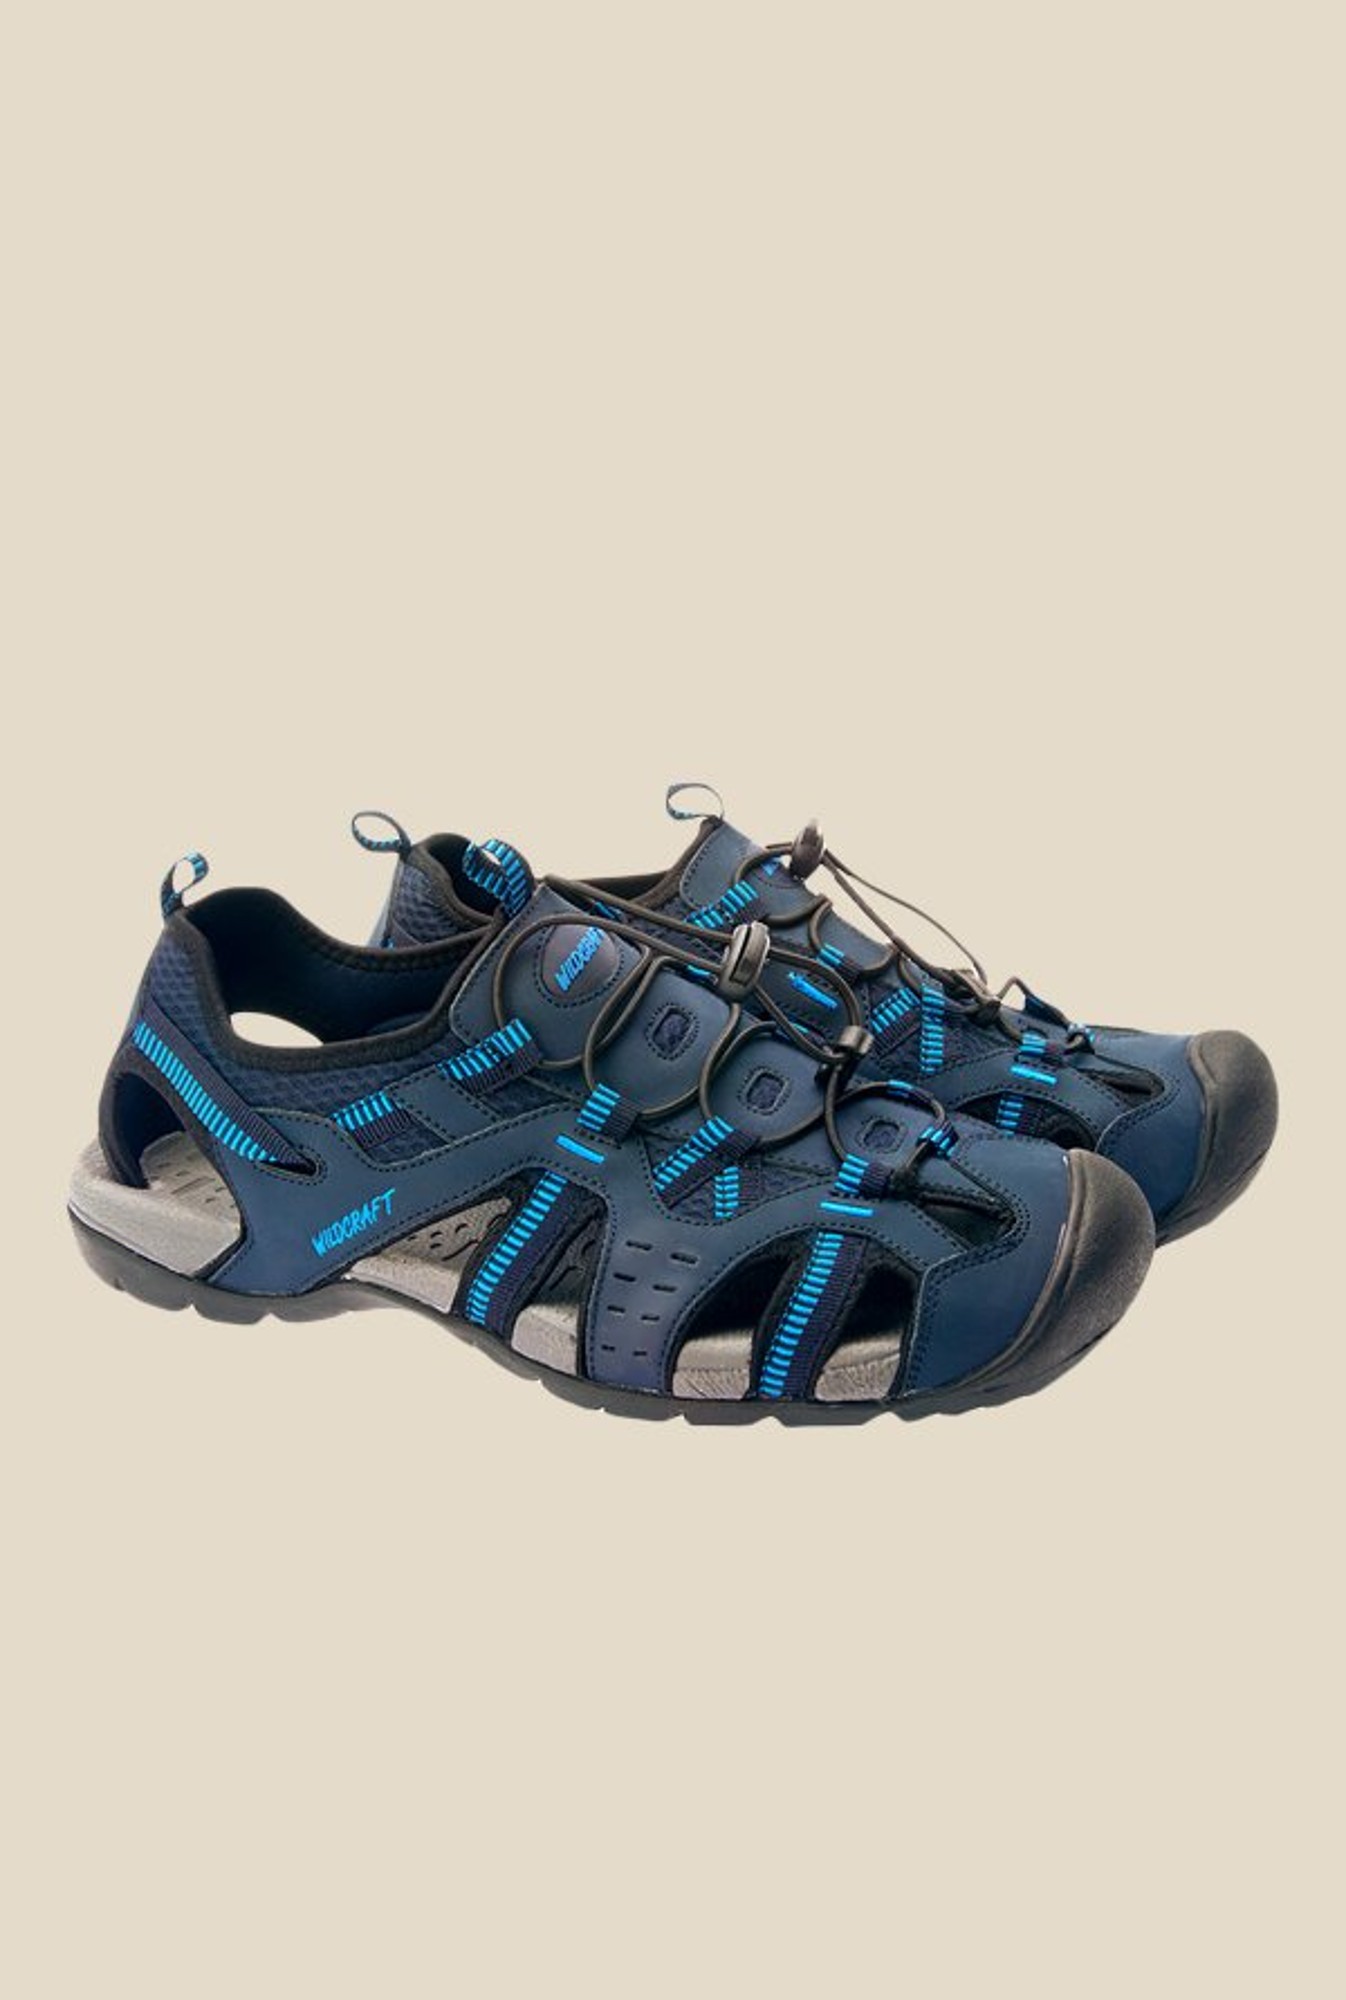 Buy Wildcraft Terrafin Navy Blue Fisherman Sandals For Men Online At Tata  CLiQ